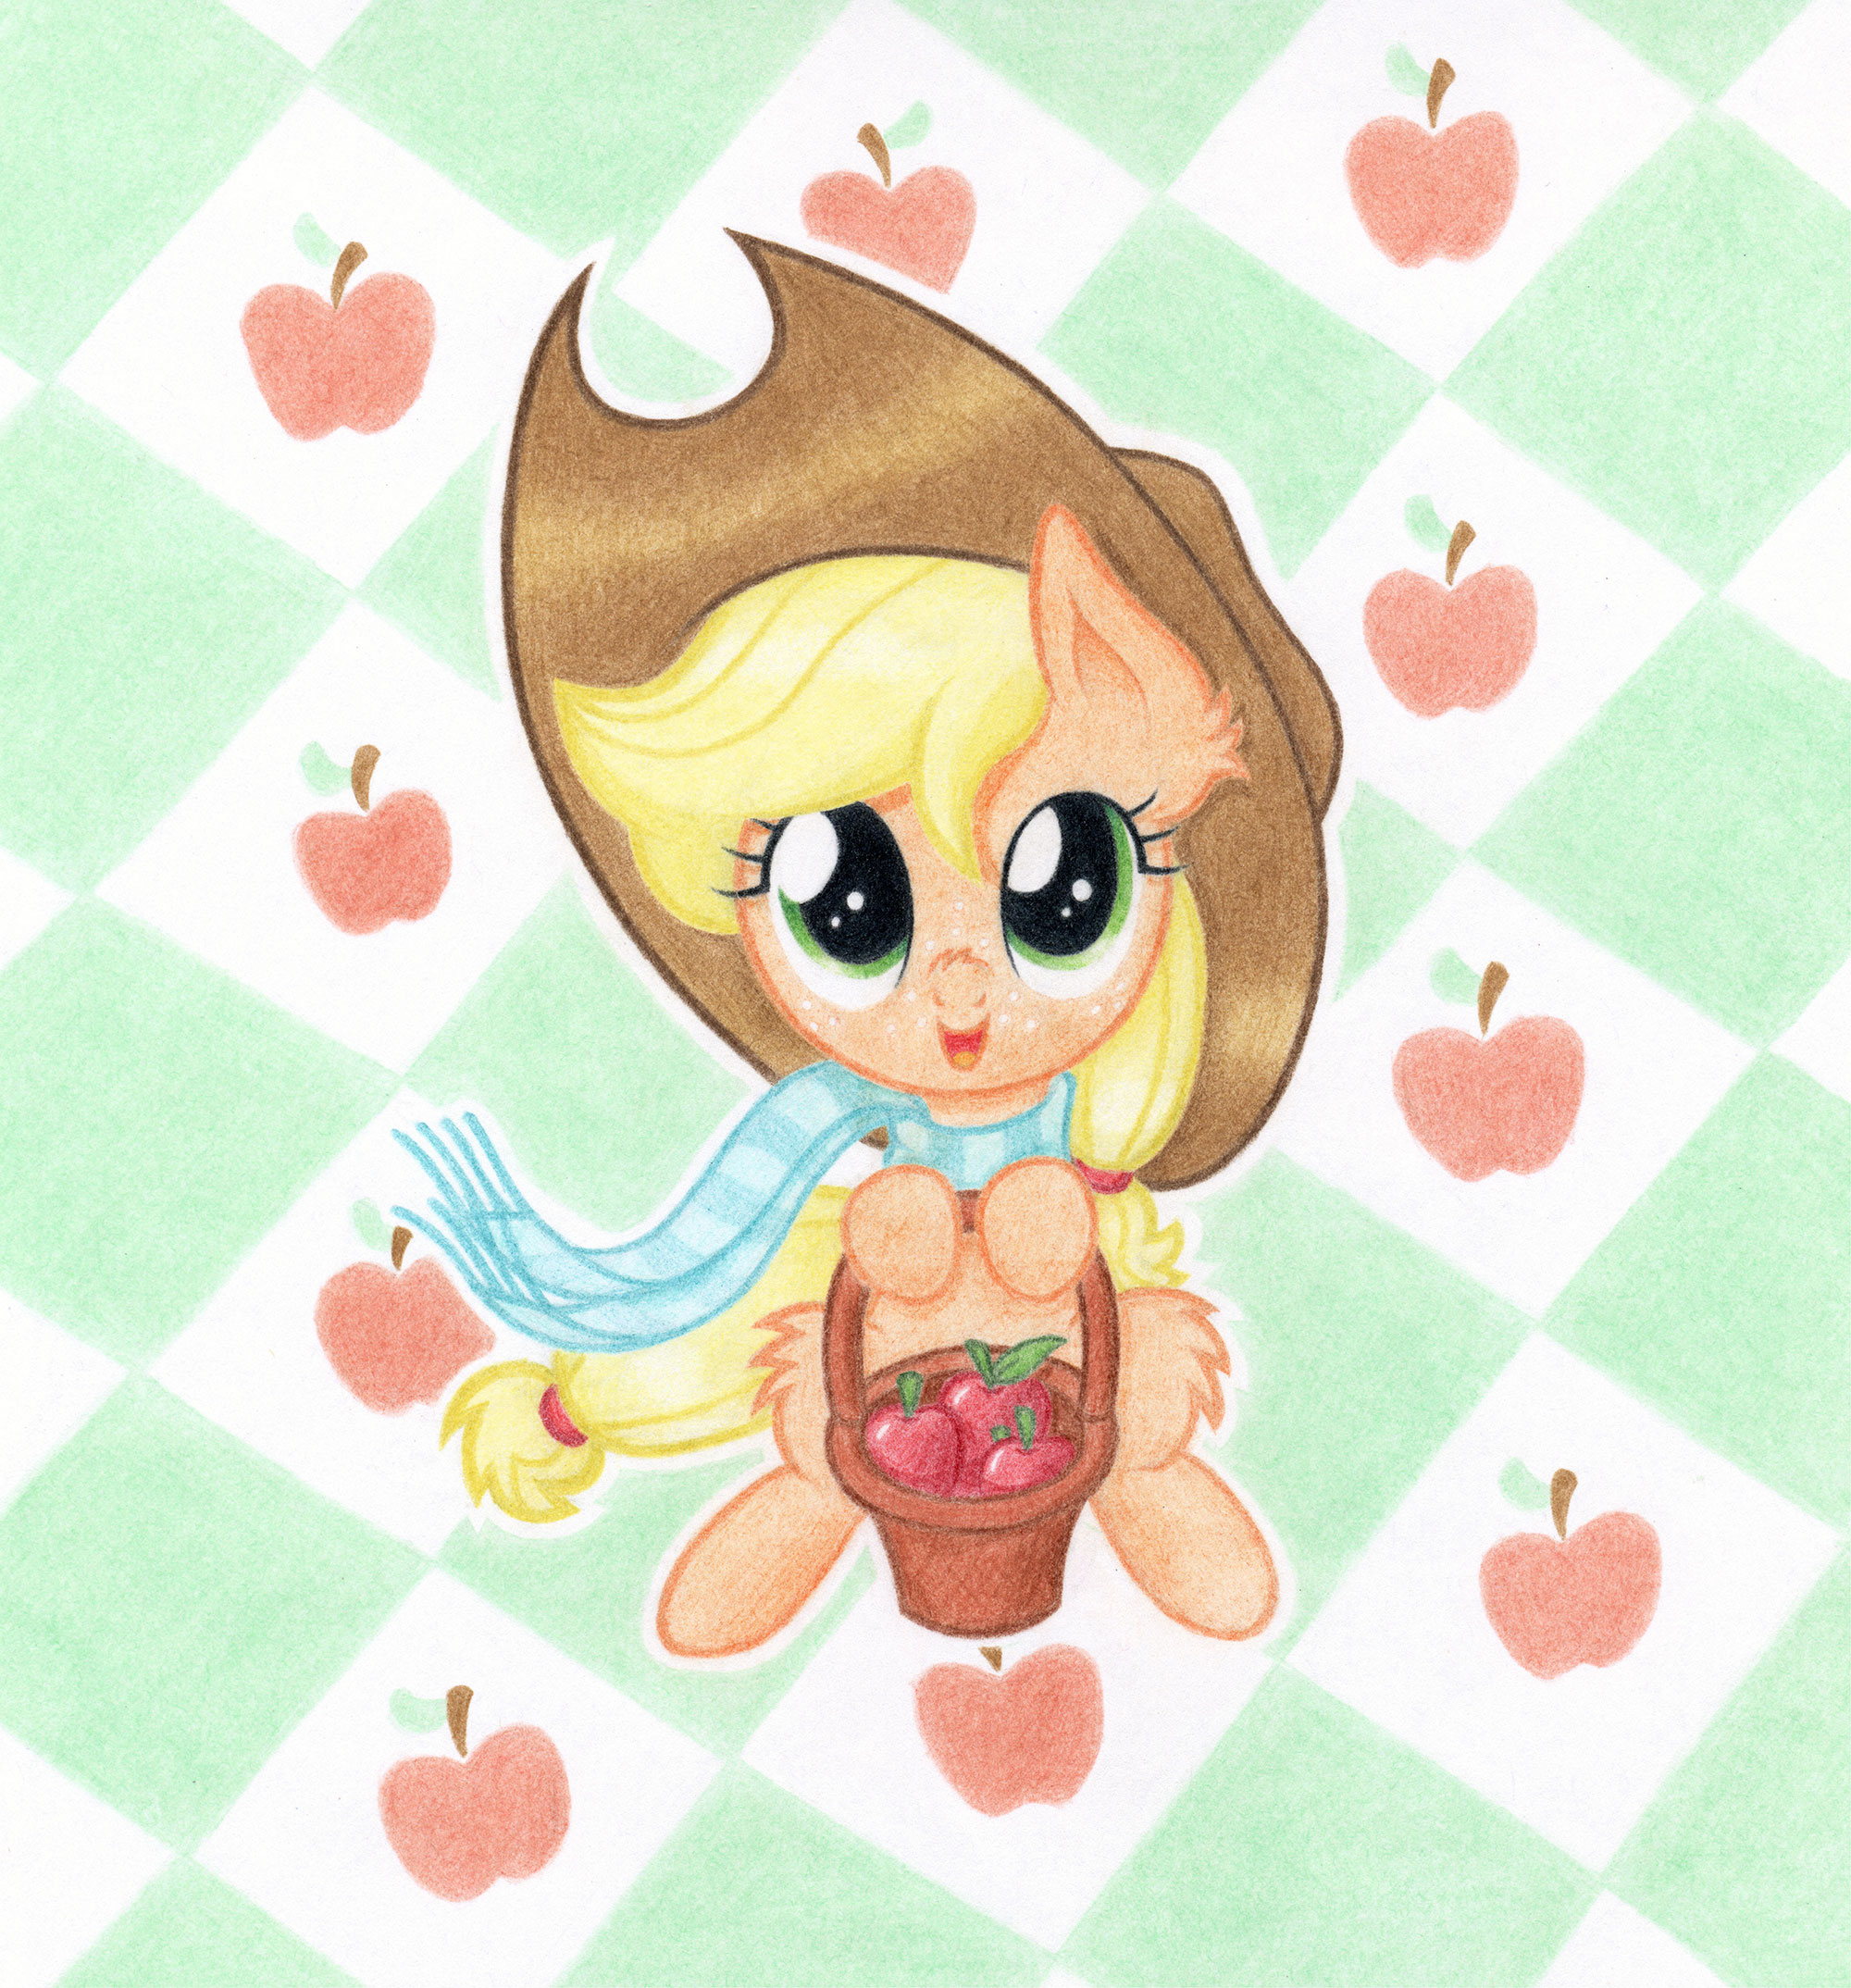 [Obrázek: buy_some_apples___by_agamnentzar-d60s7jx.jpg]